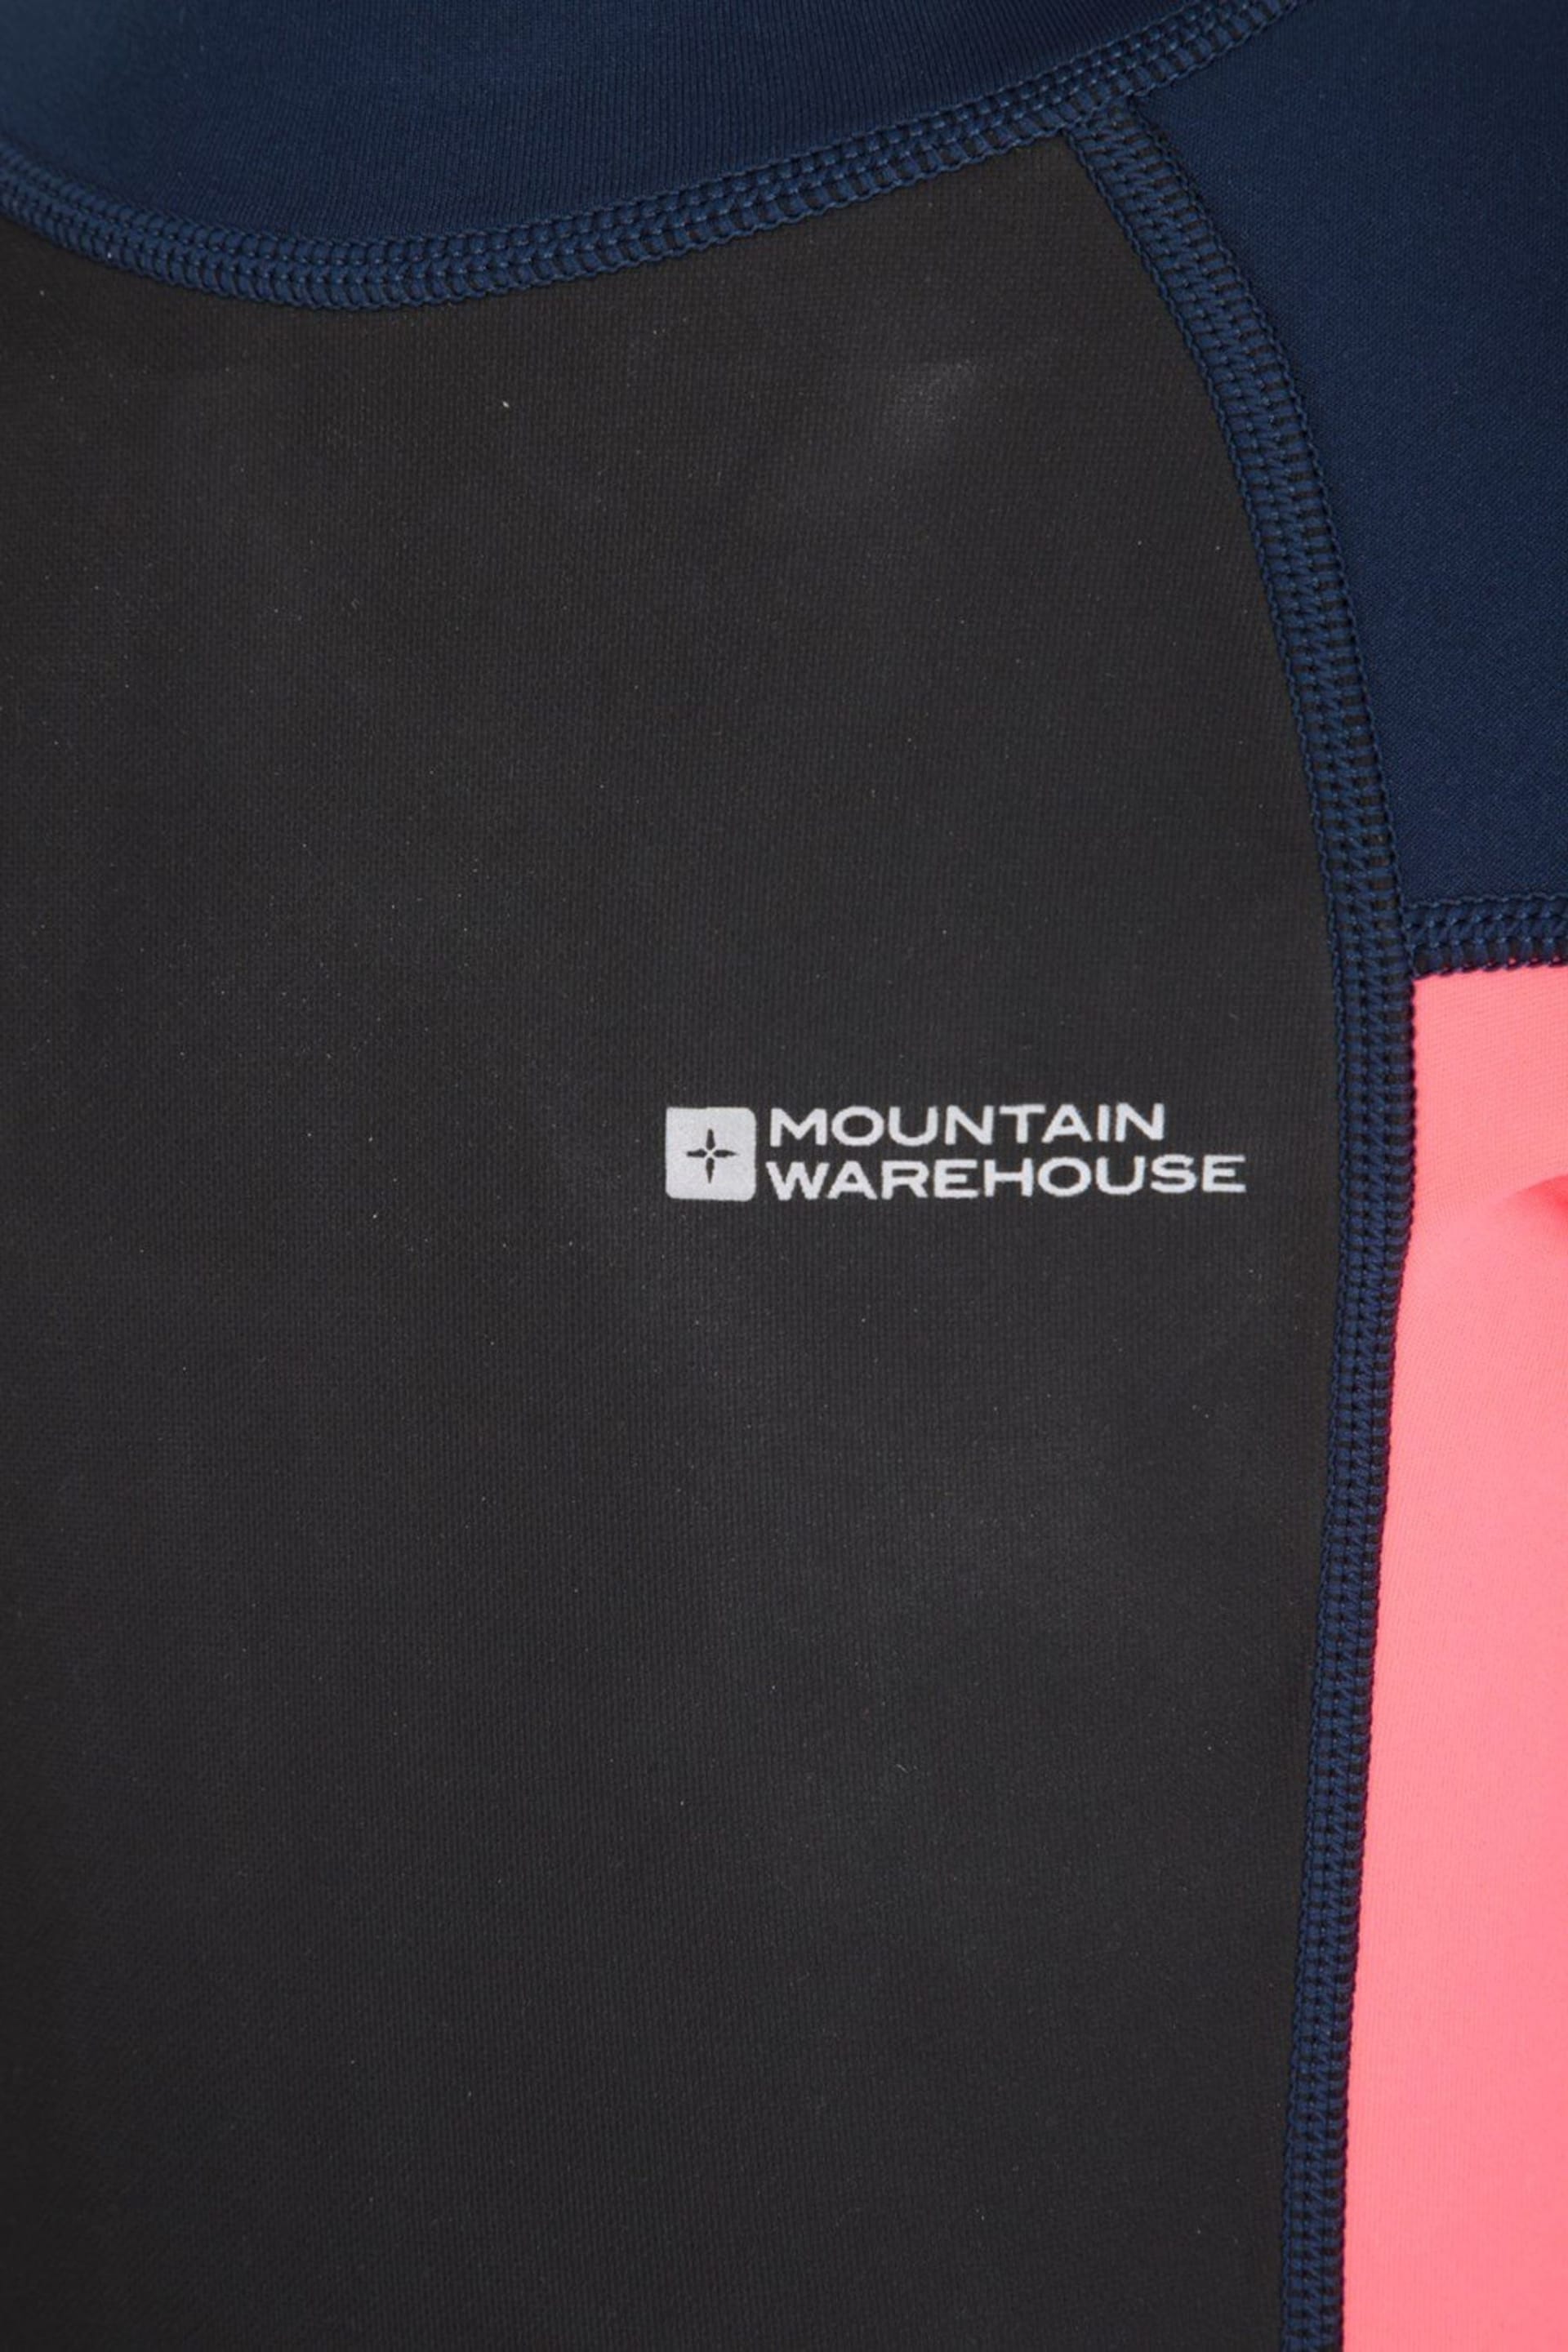 Mountain Warehouse Bright Pink Kids Full Length 2.5mm Neoprene Wetsuit - Image 4 of 4